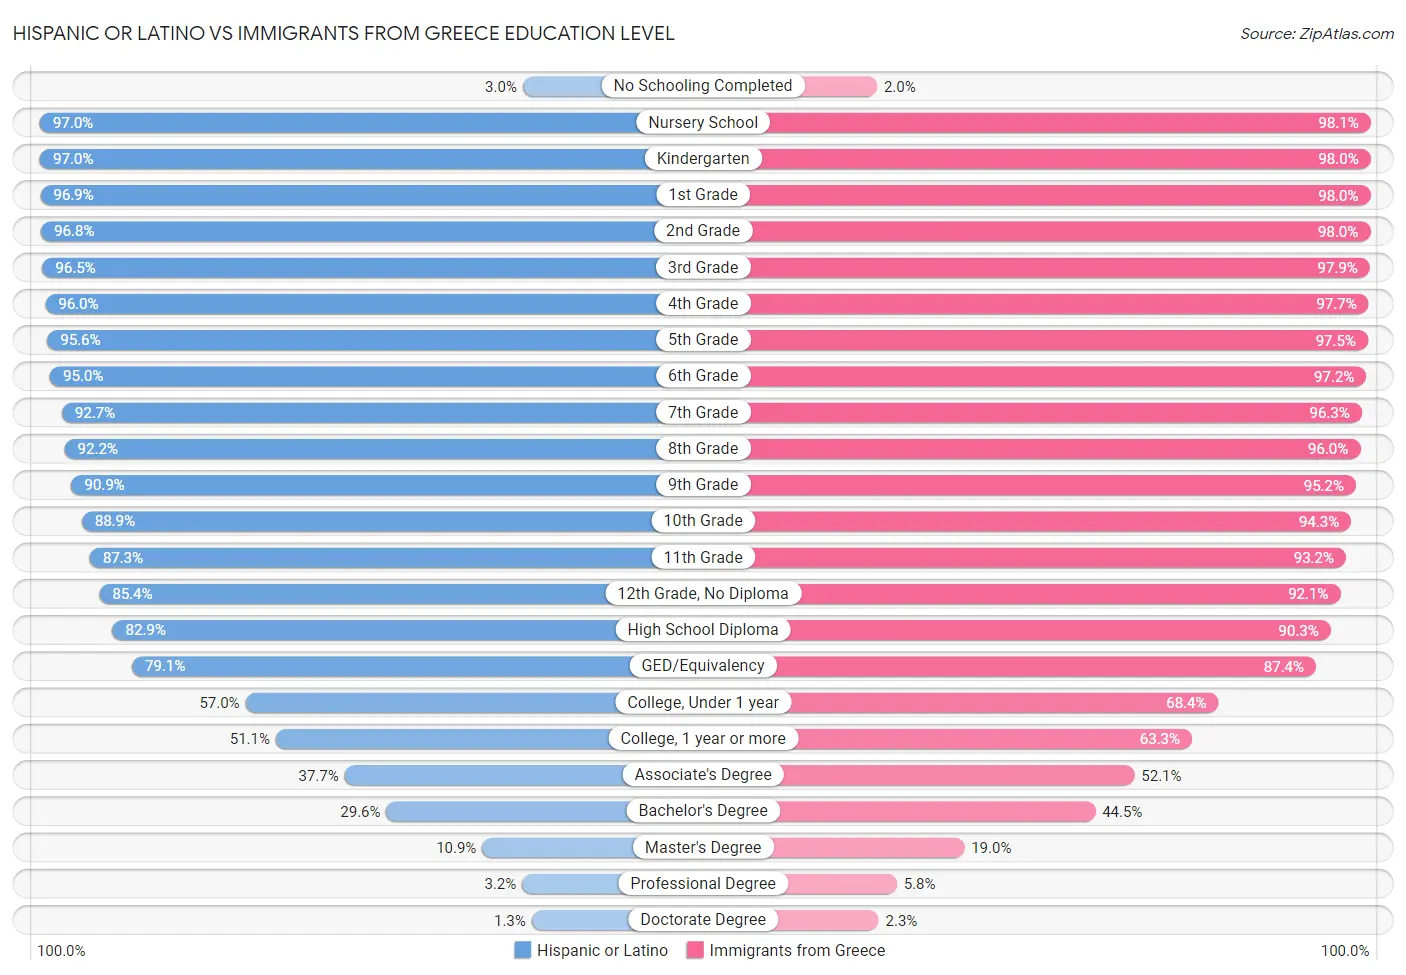 Hispanic or Latino vs Immigrants from Greece Education Level